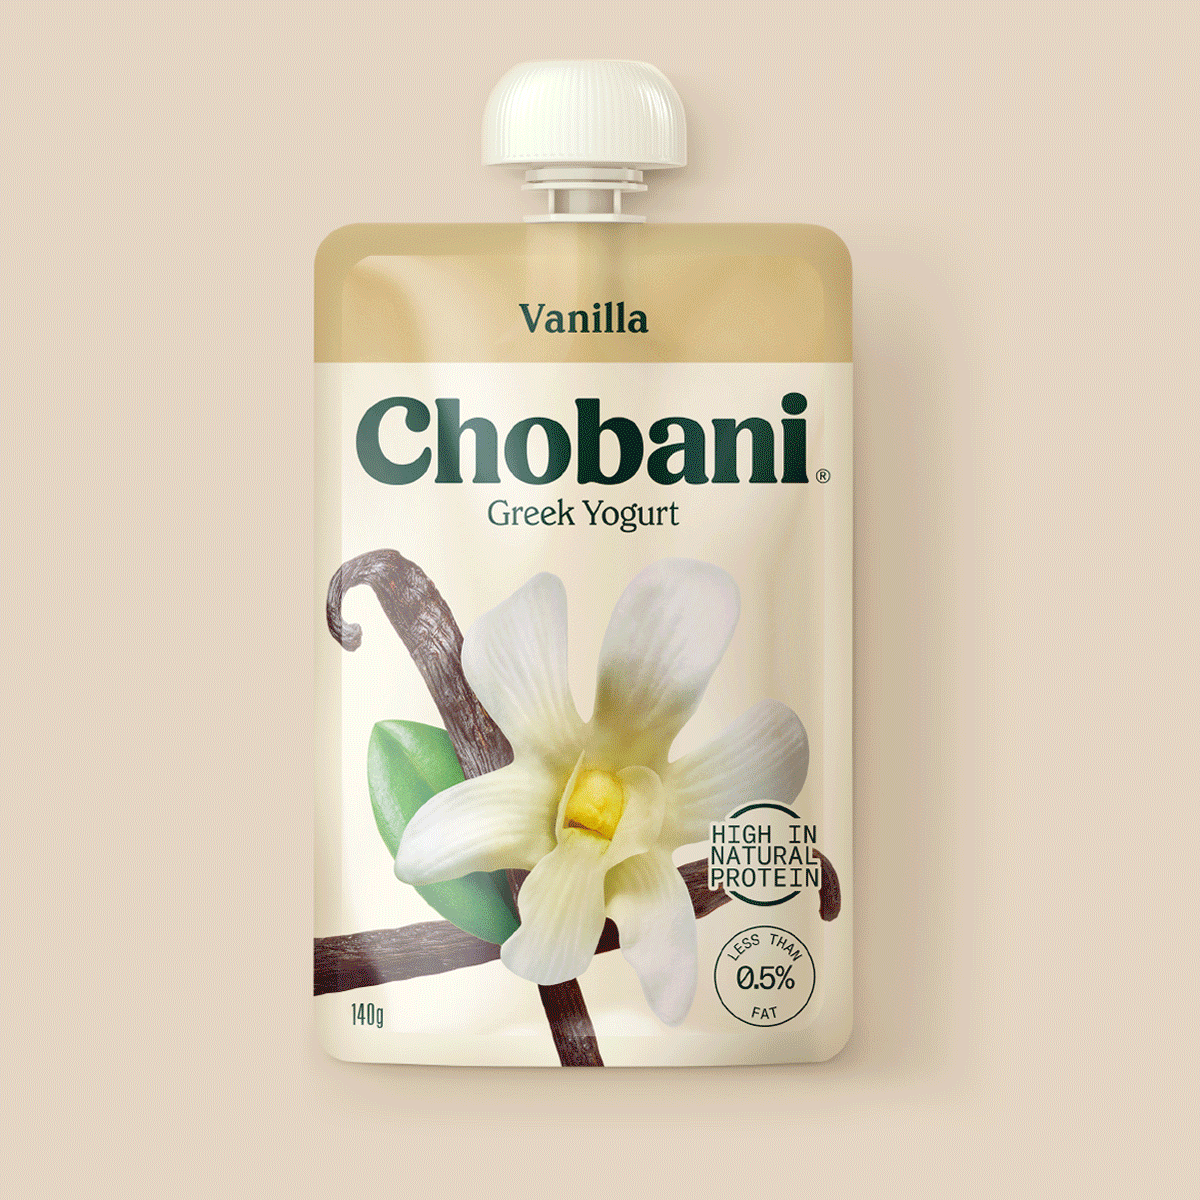 Chobani Australia Core Range Yogurt- Brand Identity & Packaging Design Refresh FMCG